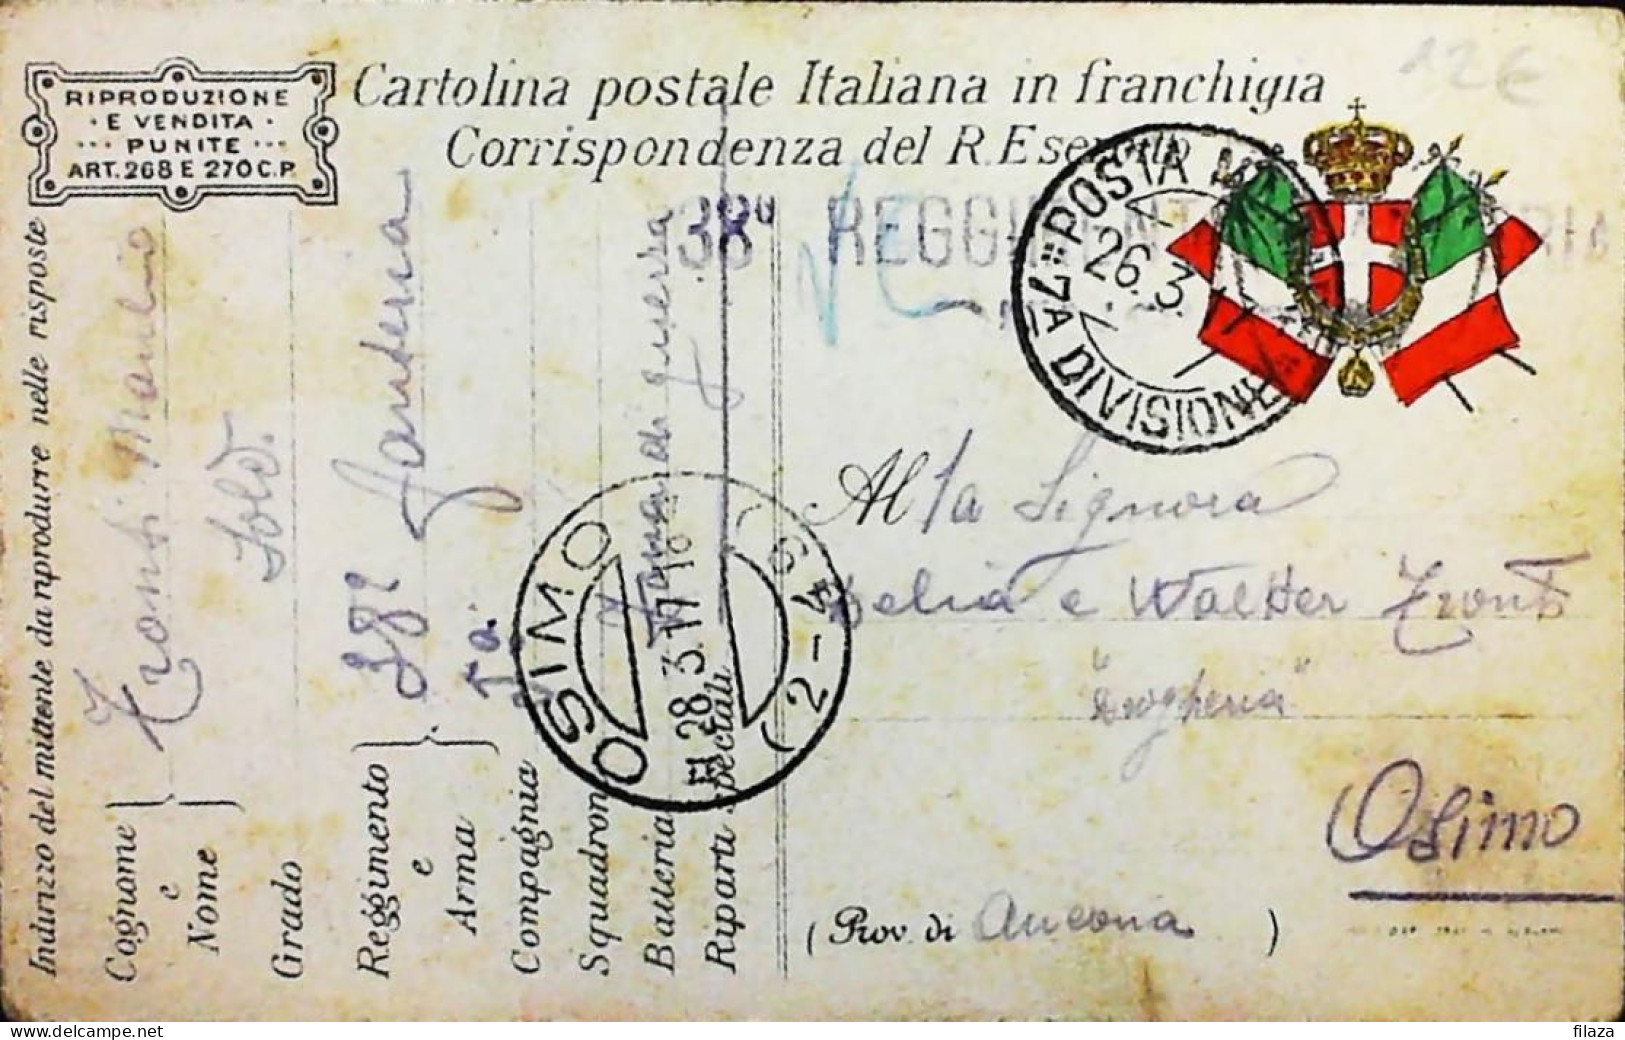 ITALY - WW1 – WWI Posta Militare 1915-1918 - Franchigia ILLUSTRATA (AGIAB) - S8086 - Military Mail (PM)